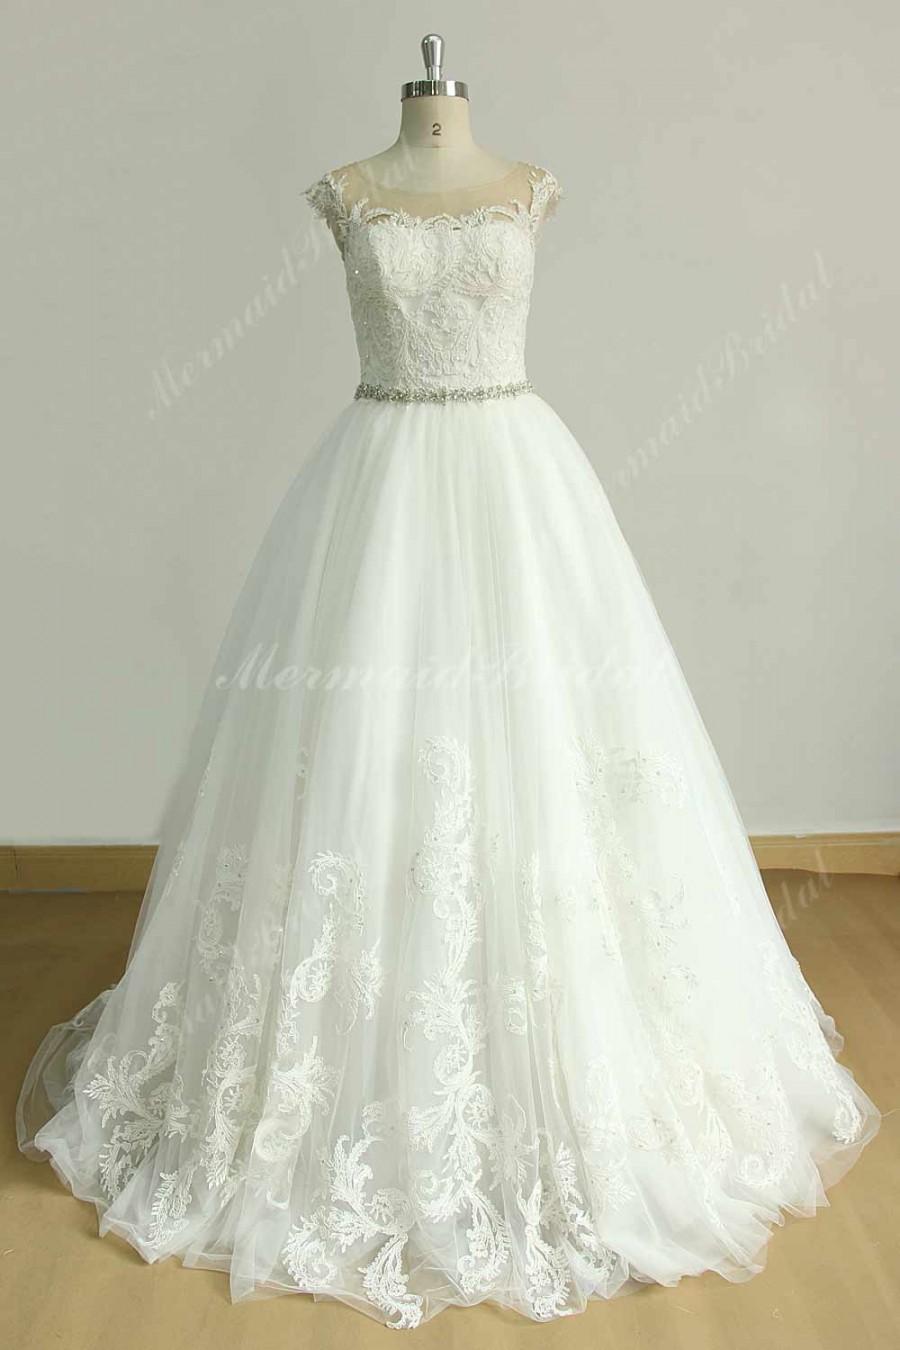 زفاف - Very ELegant tulle lace A line wedding dress with rhinestone beading sash and lace capsleeves